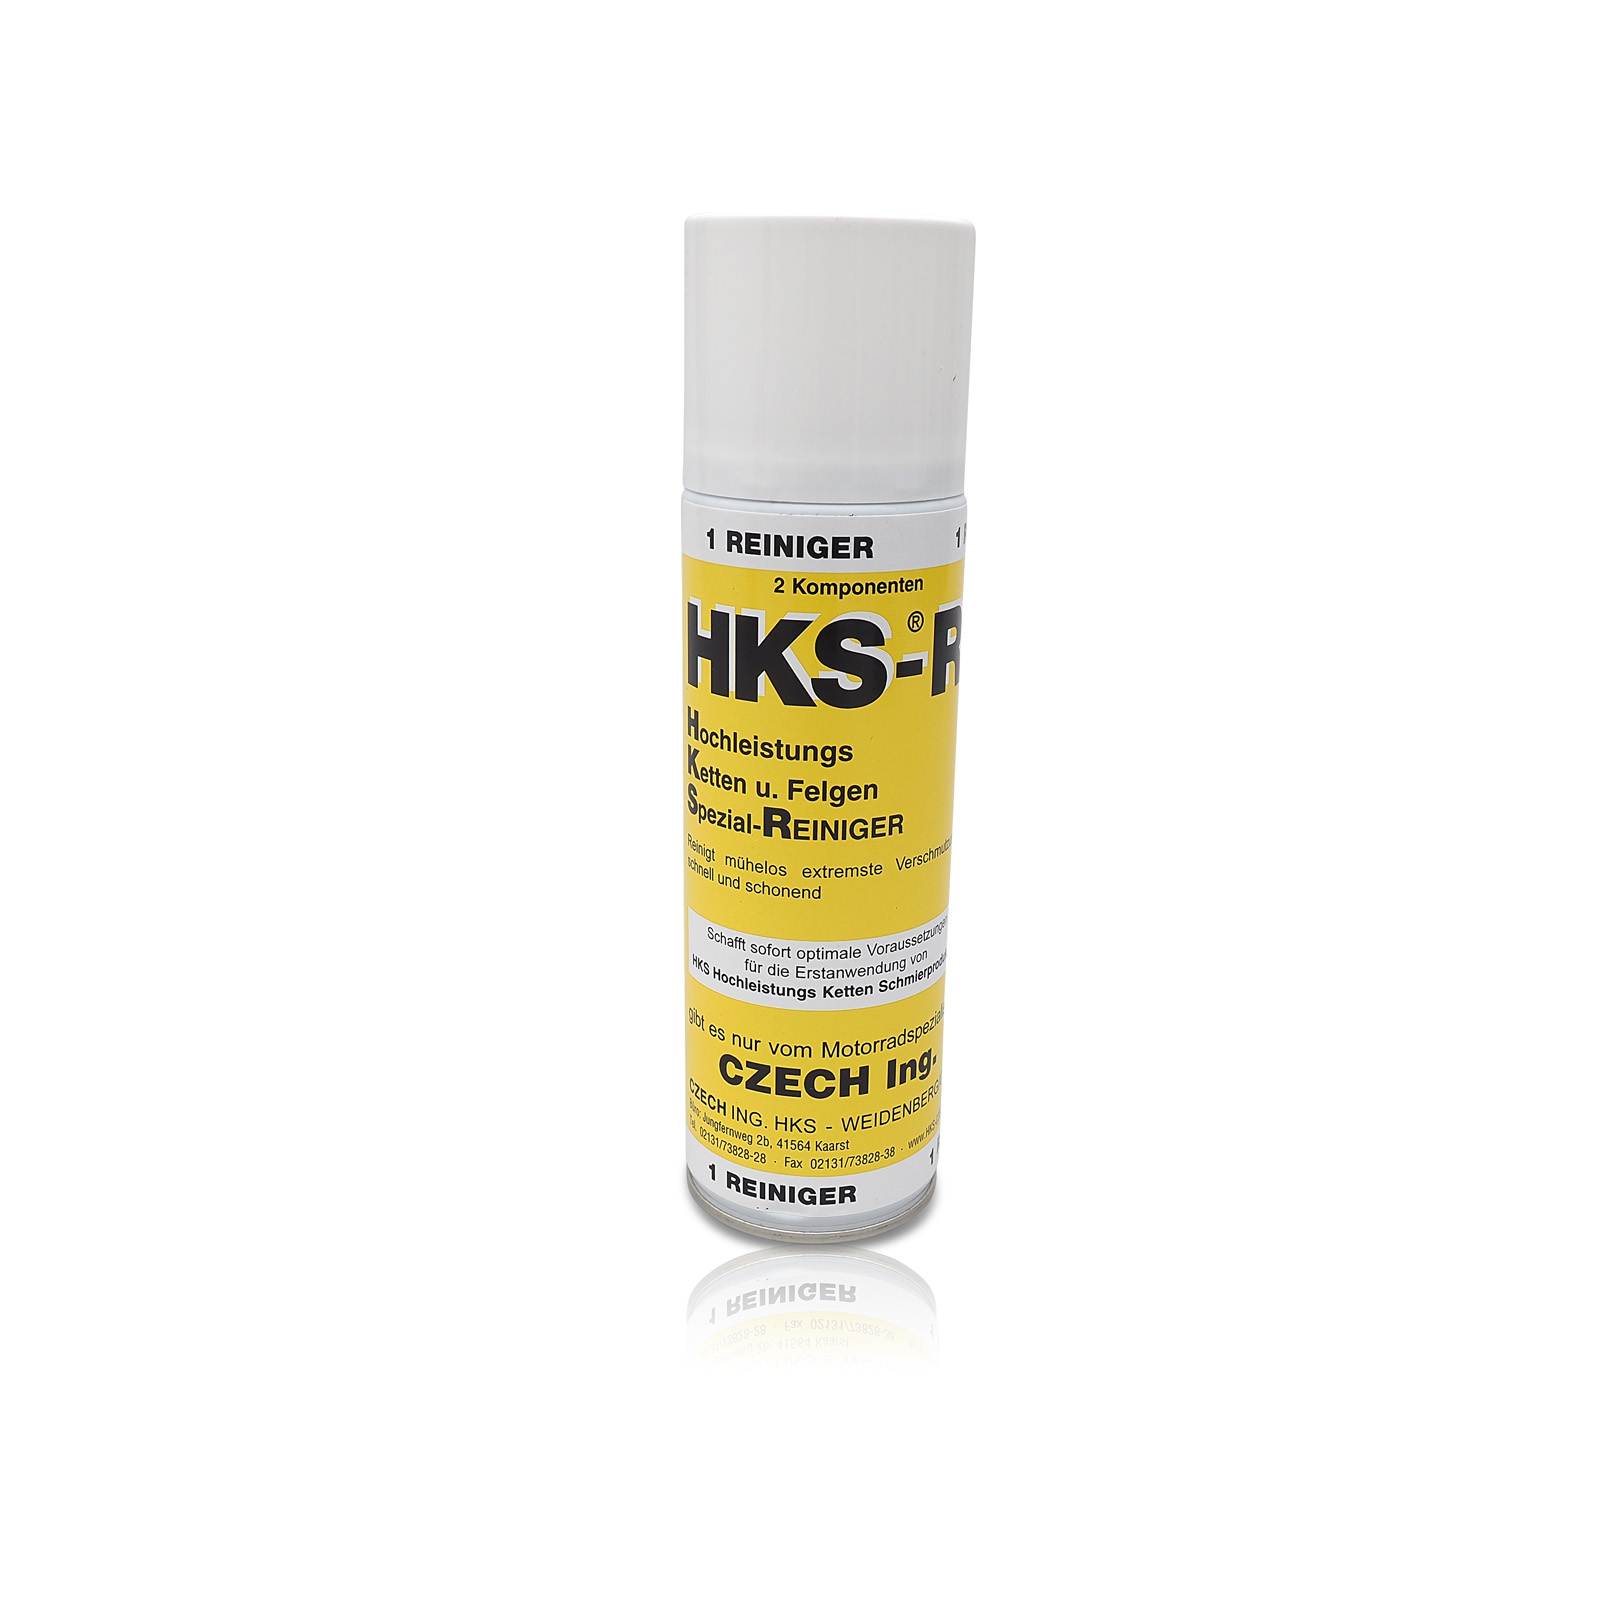 HKS HKS-R Extrem Kettenreiniger Neutralisierer 2 Komponenten Reiniger  NEU 